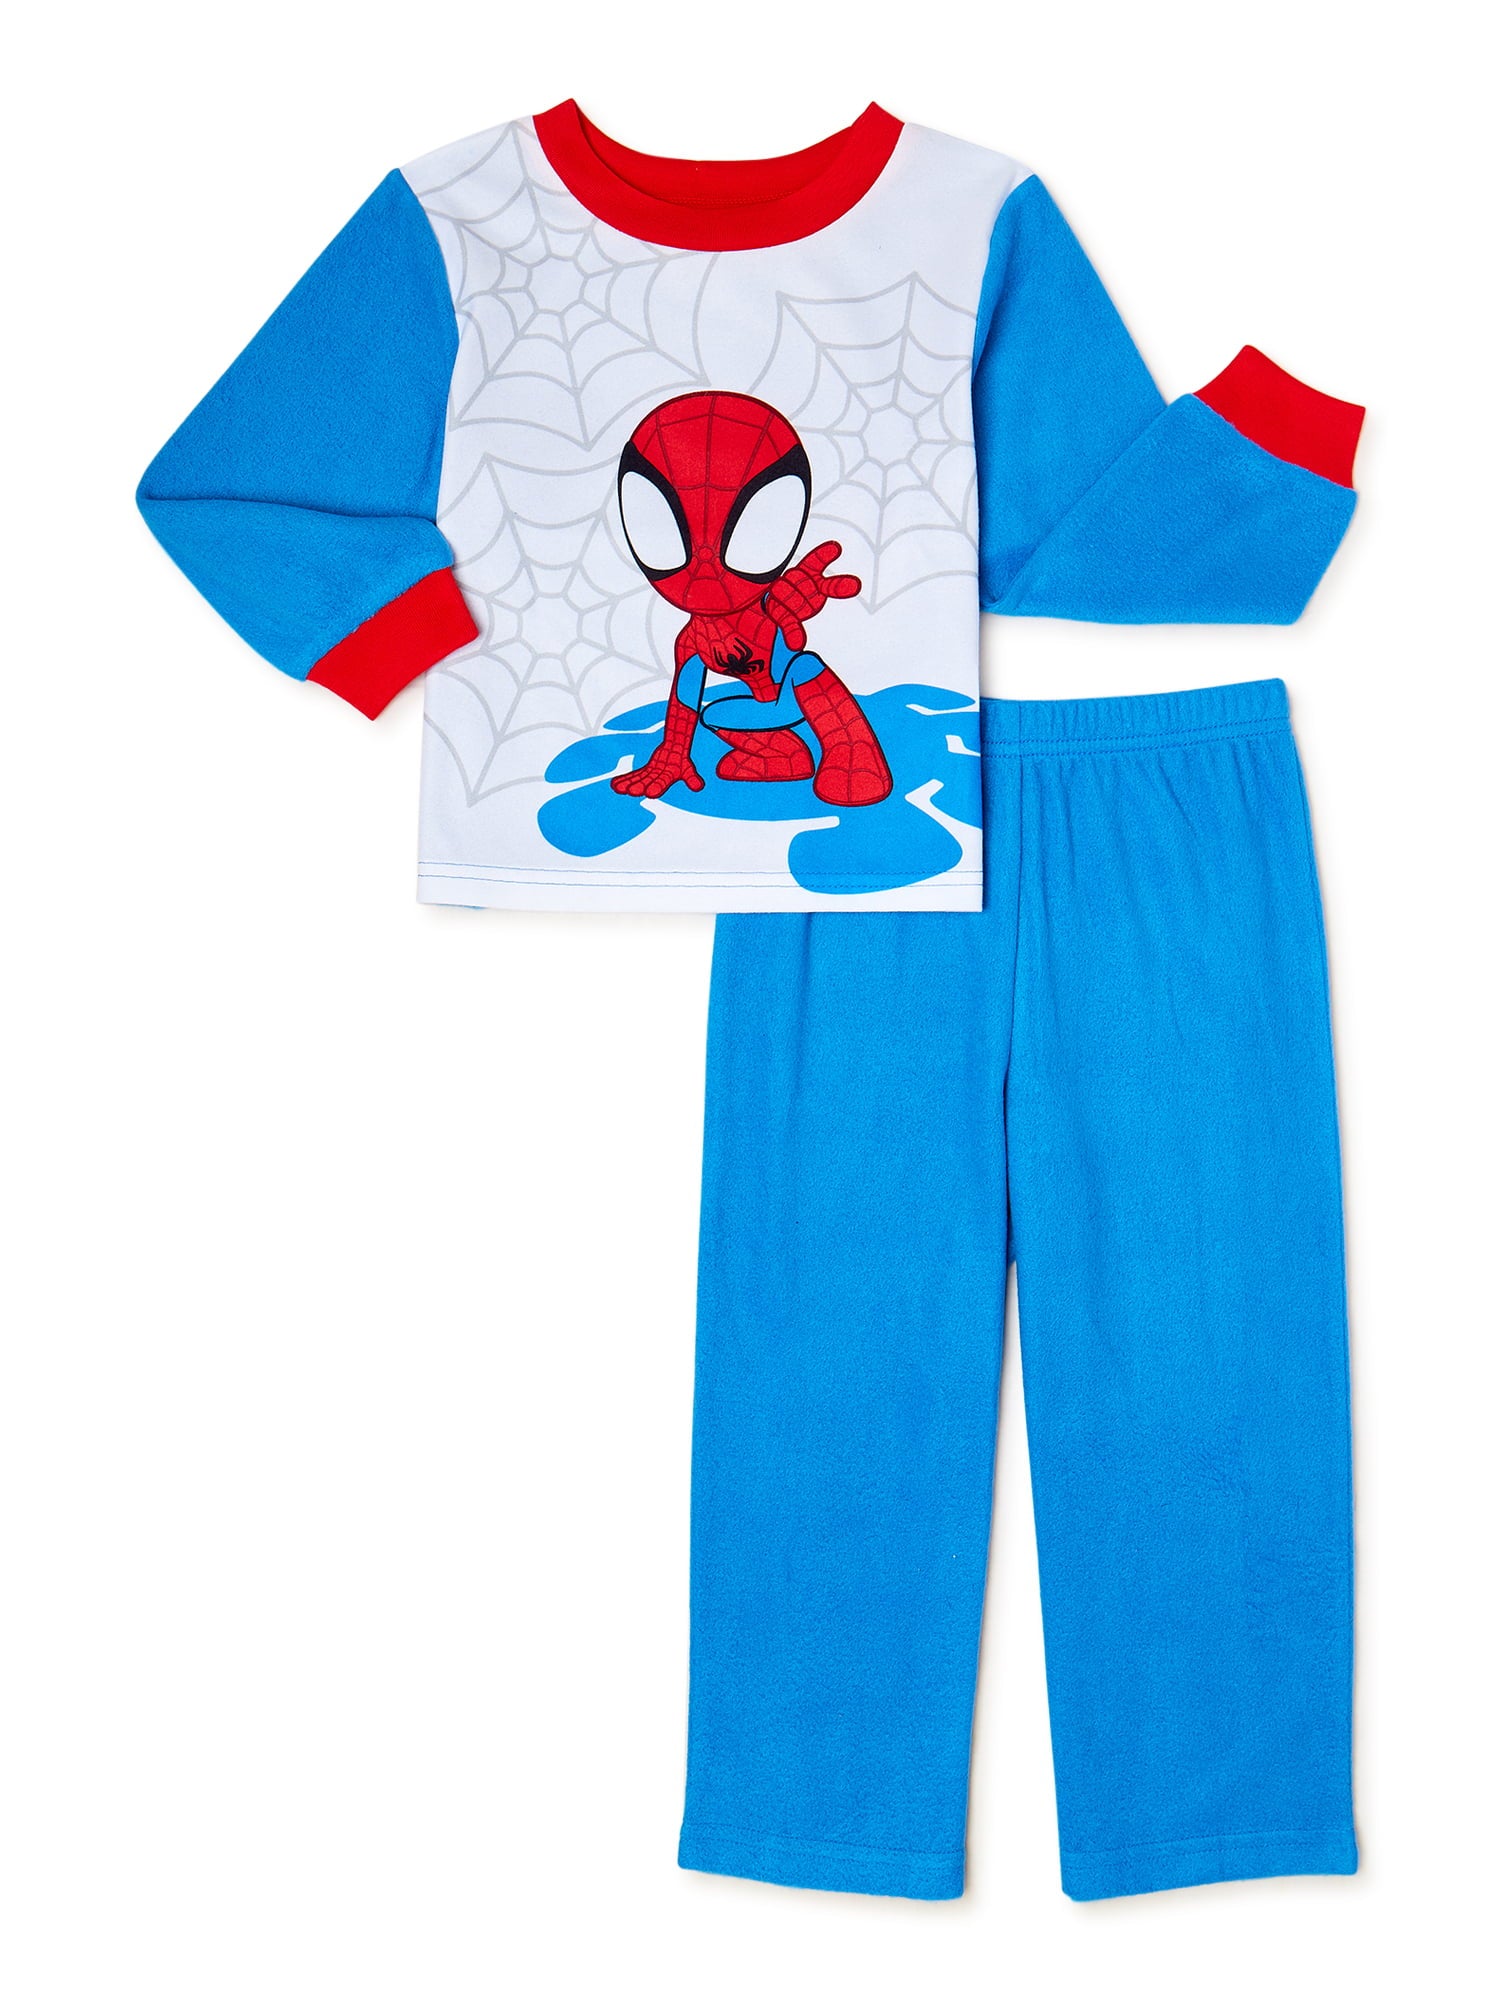 Spider-Man Baby & Toddler Boys Pajama Set, 2-Piece, Sizes 12M-5T